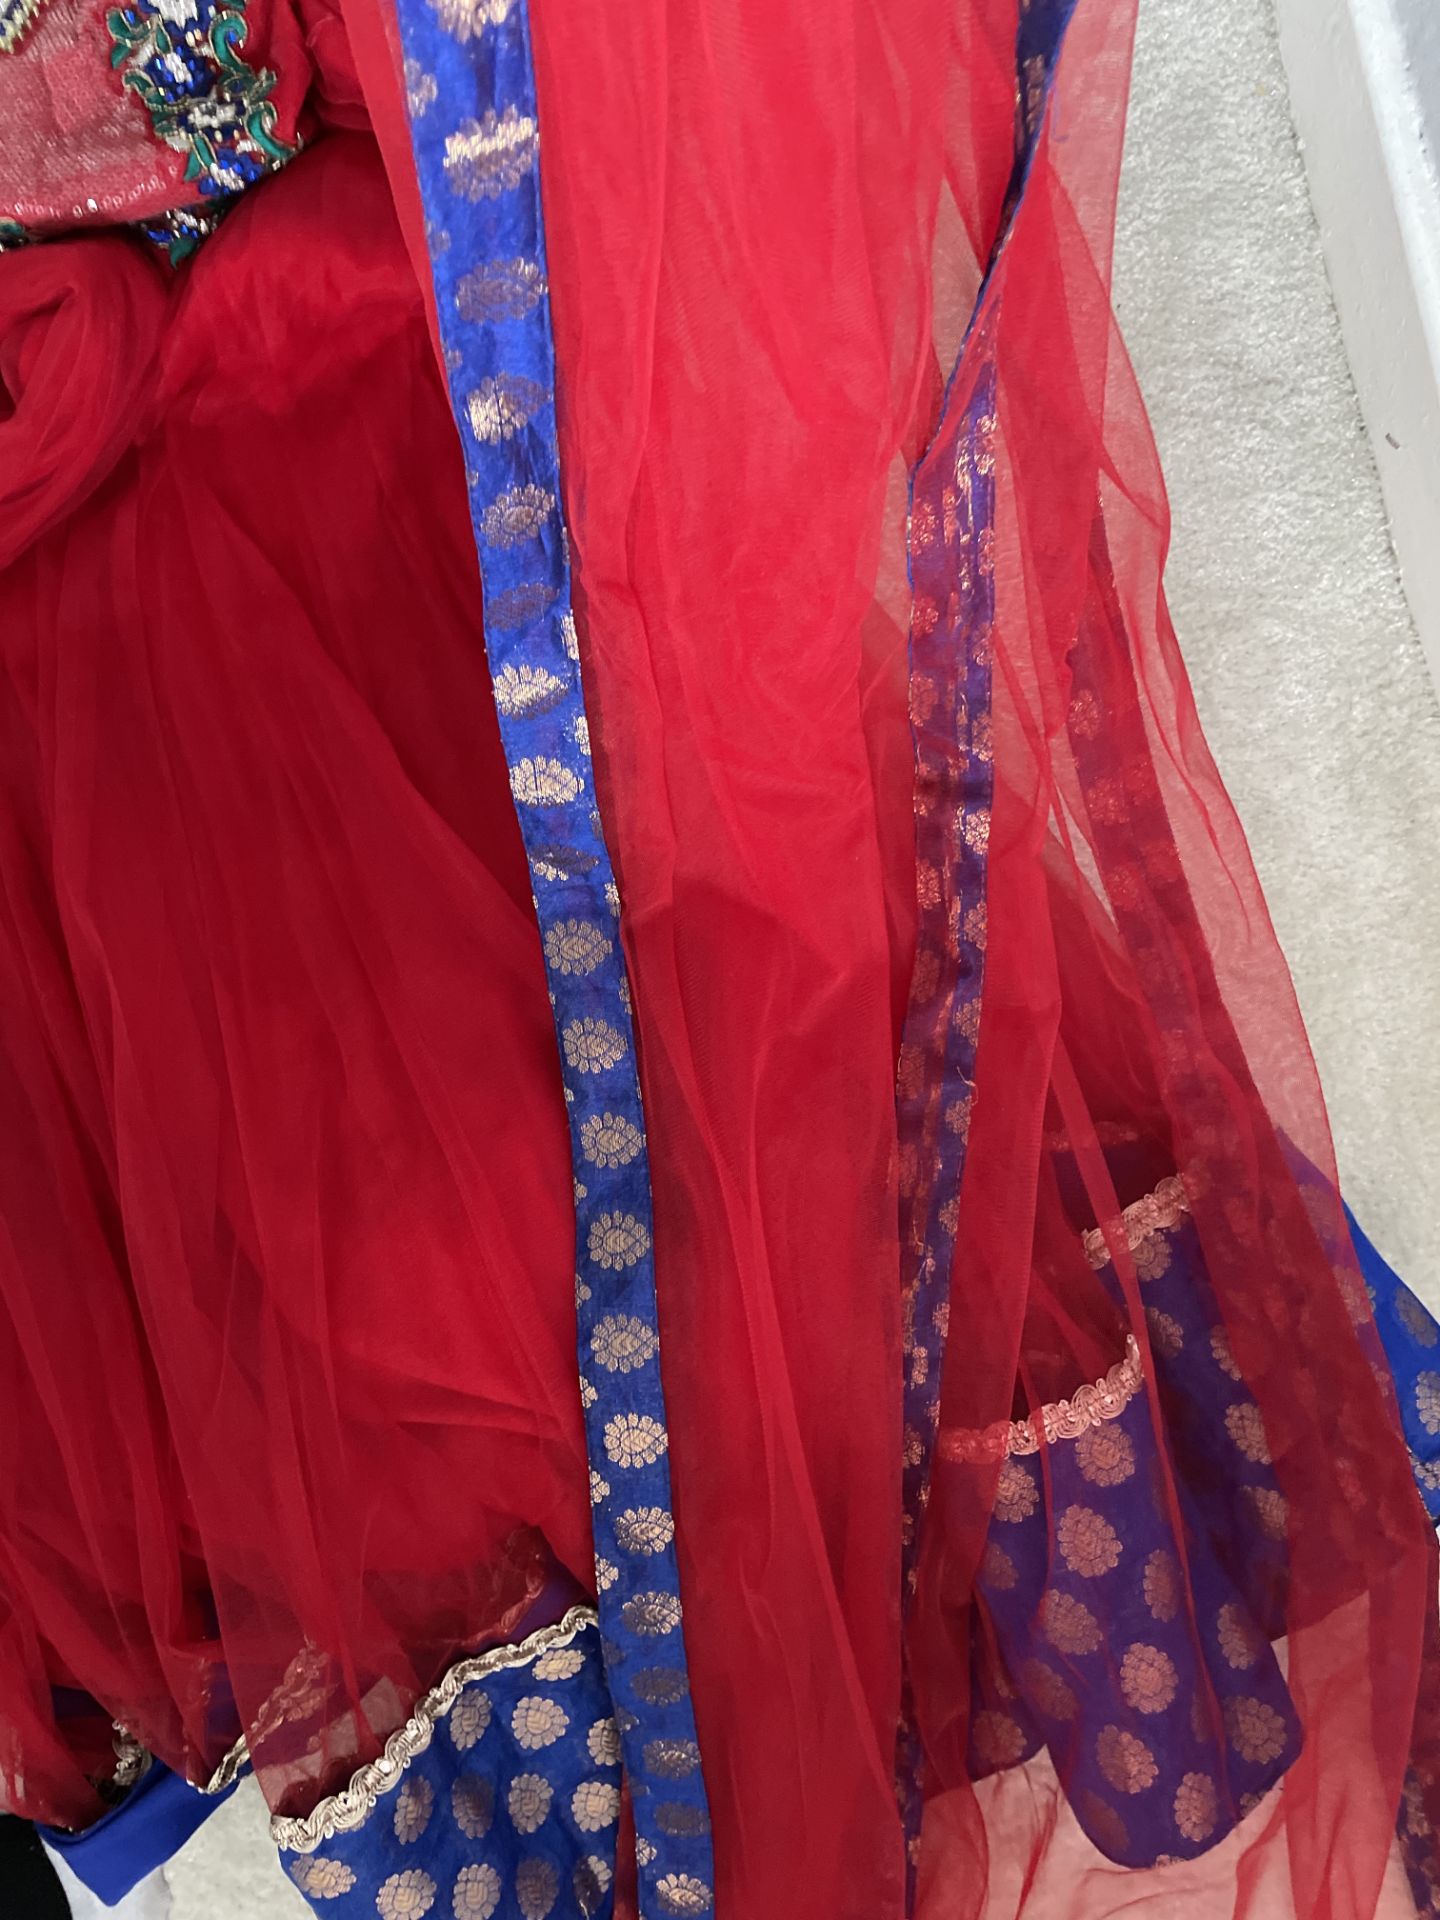 Red And Blue Designer Dress - Image 4 of 4